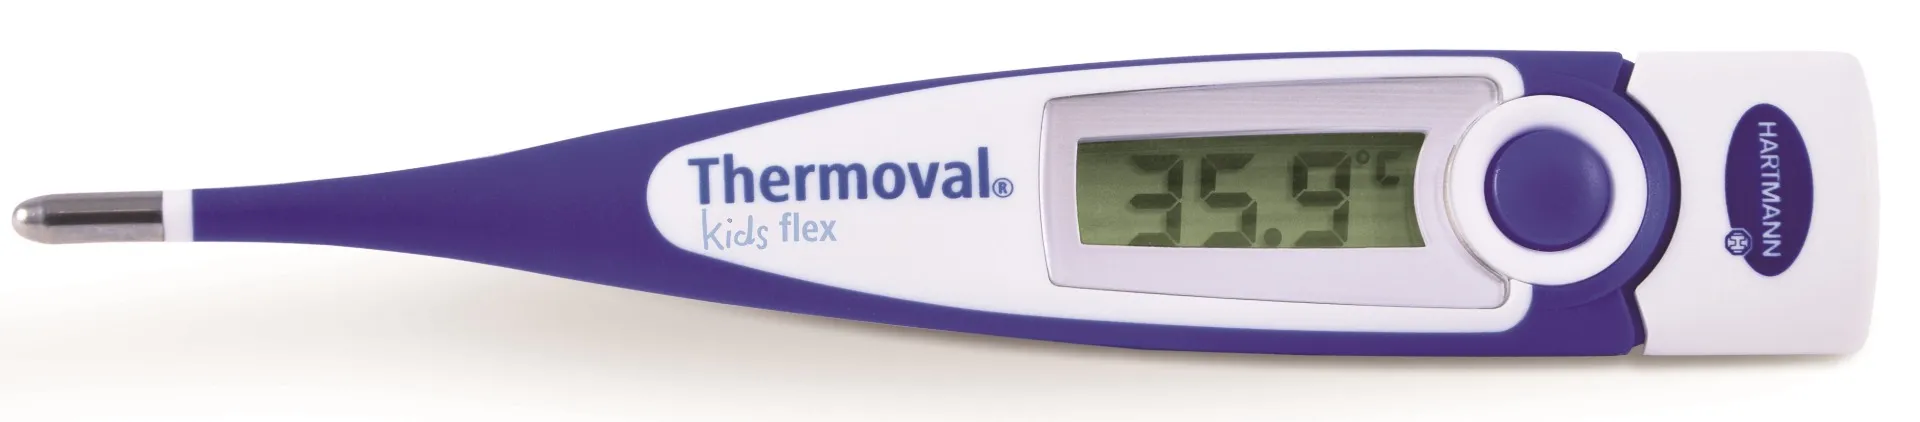 Termometru digital cu timp scurt de masurare si cap flexibil, Thermoval Kids Flex, Hartmann